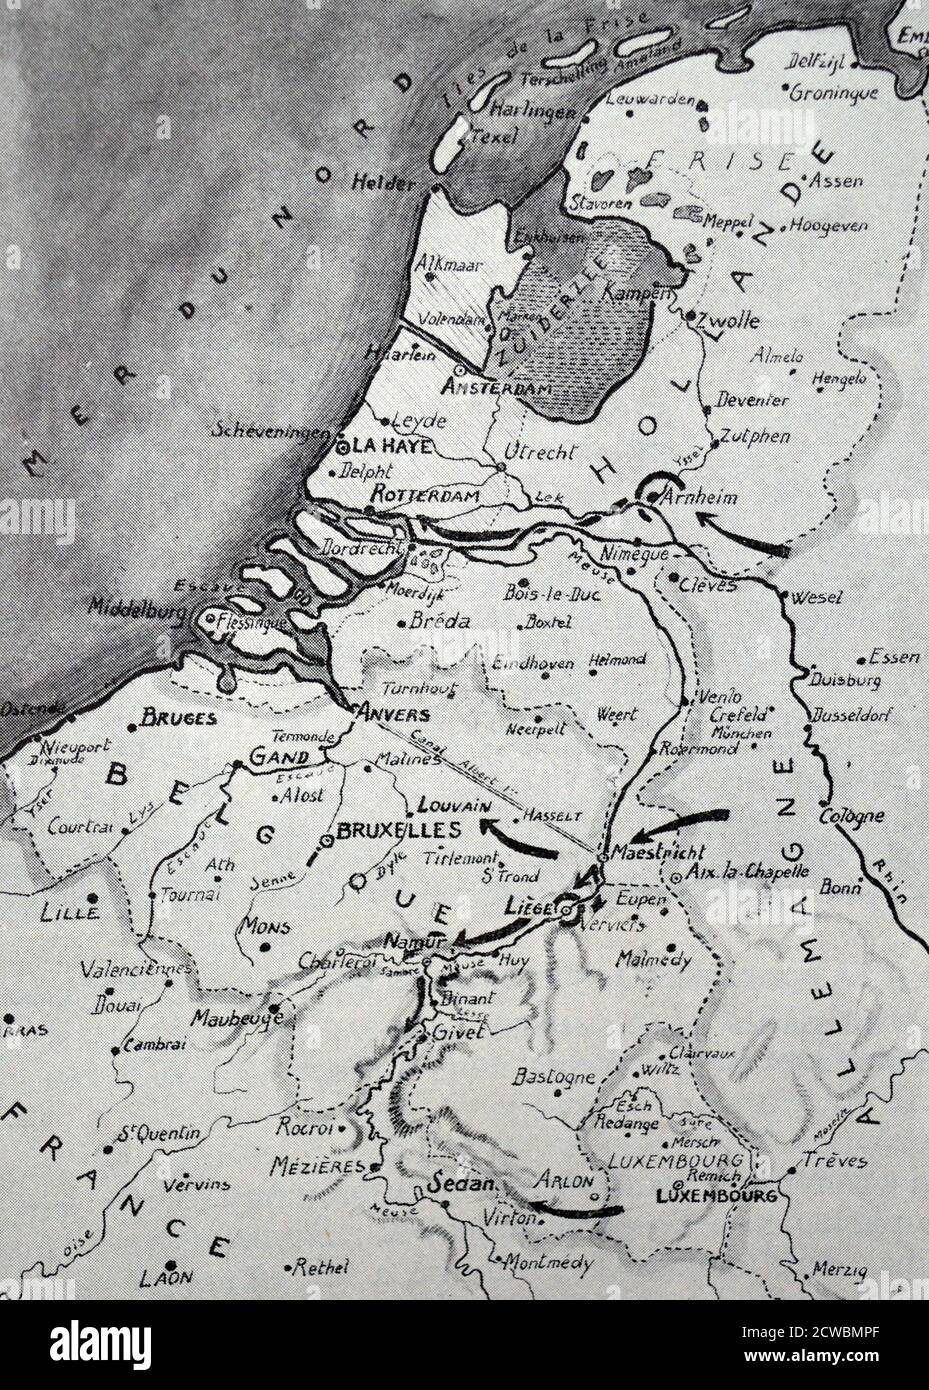 netherlands map 1940s